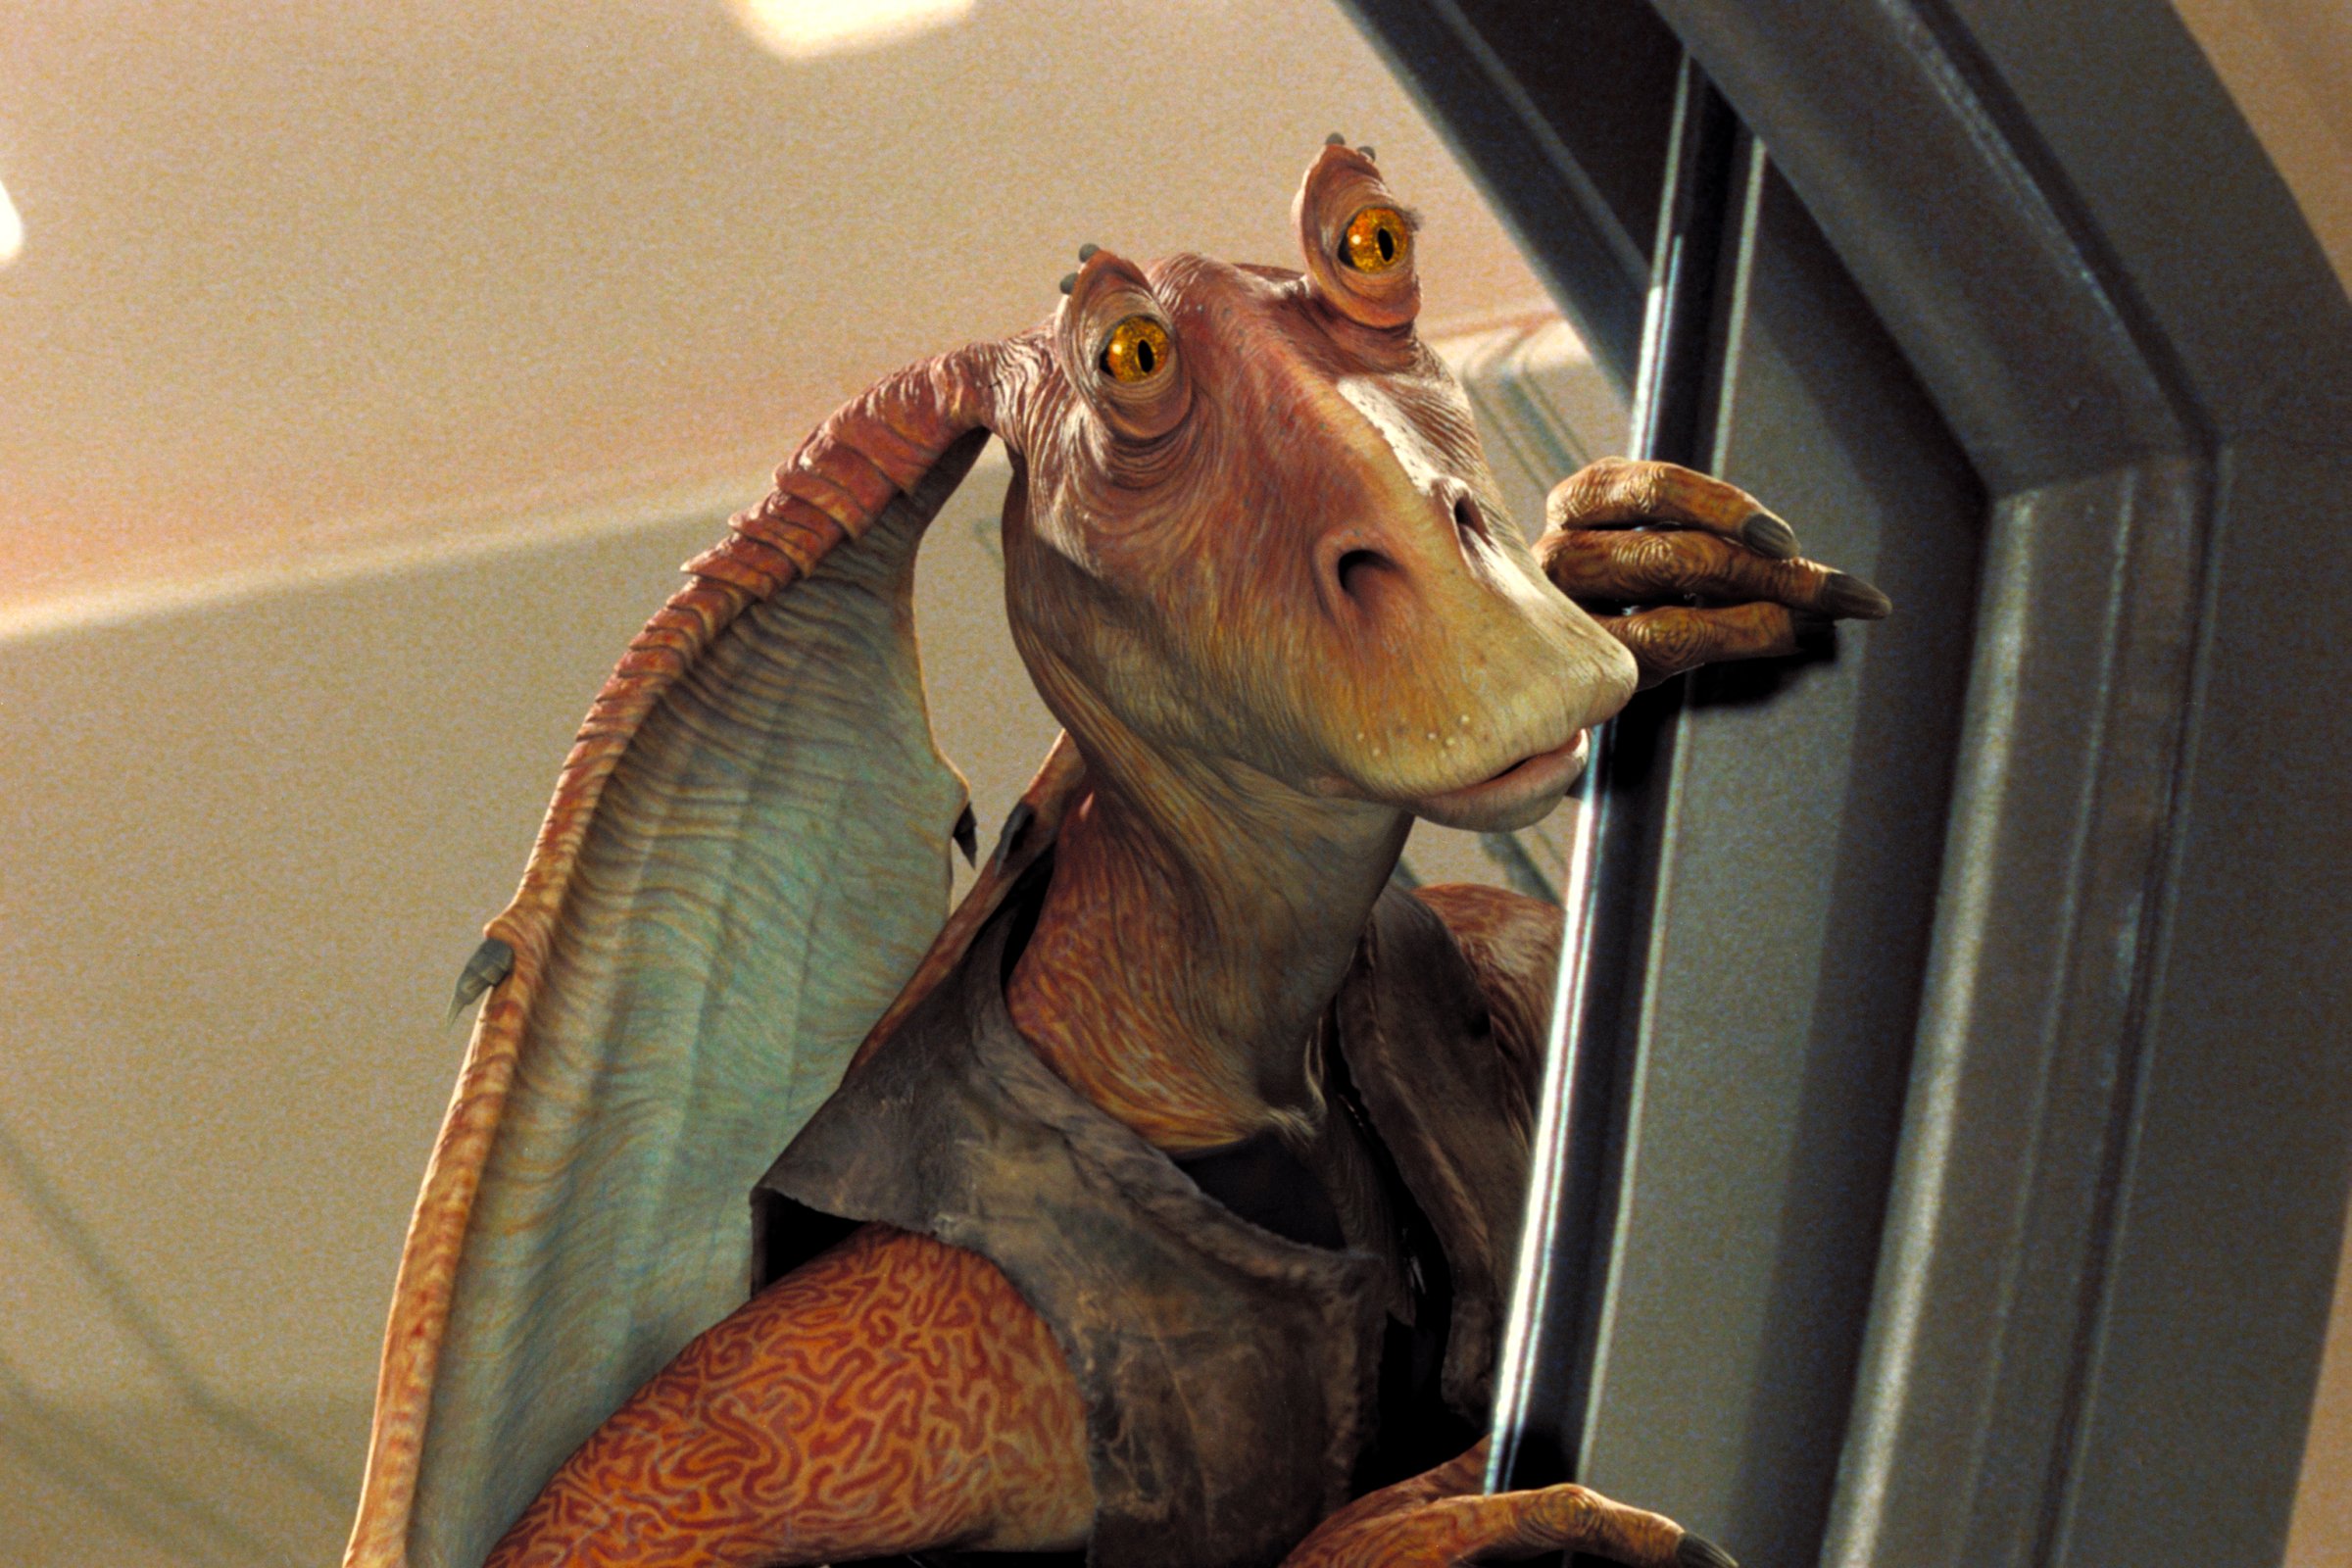 Jar Jar Binks in Star Wars Episode I: The Phantom Menace.